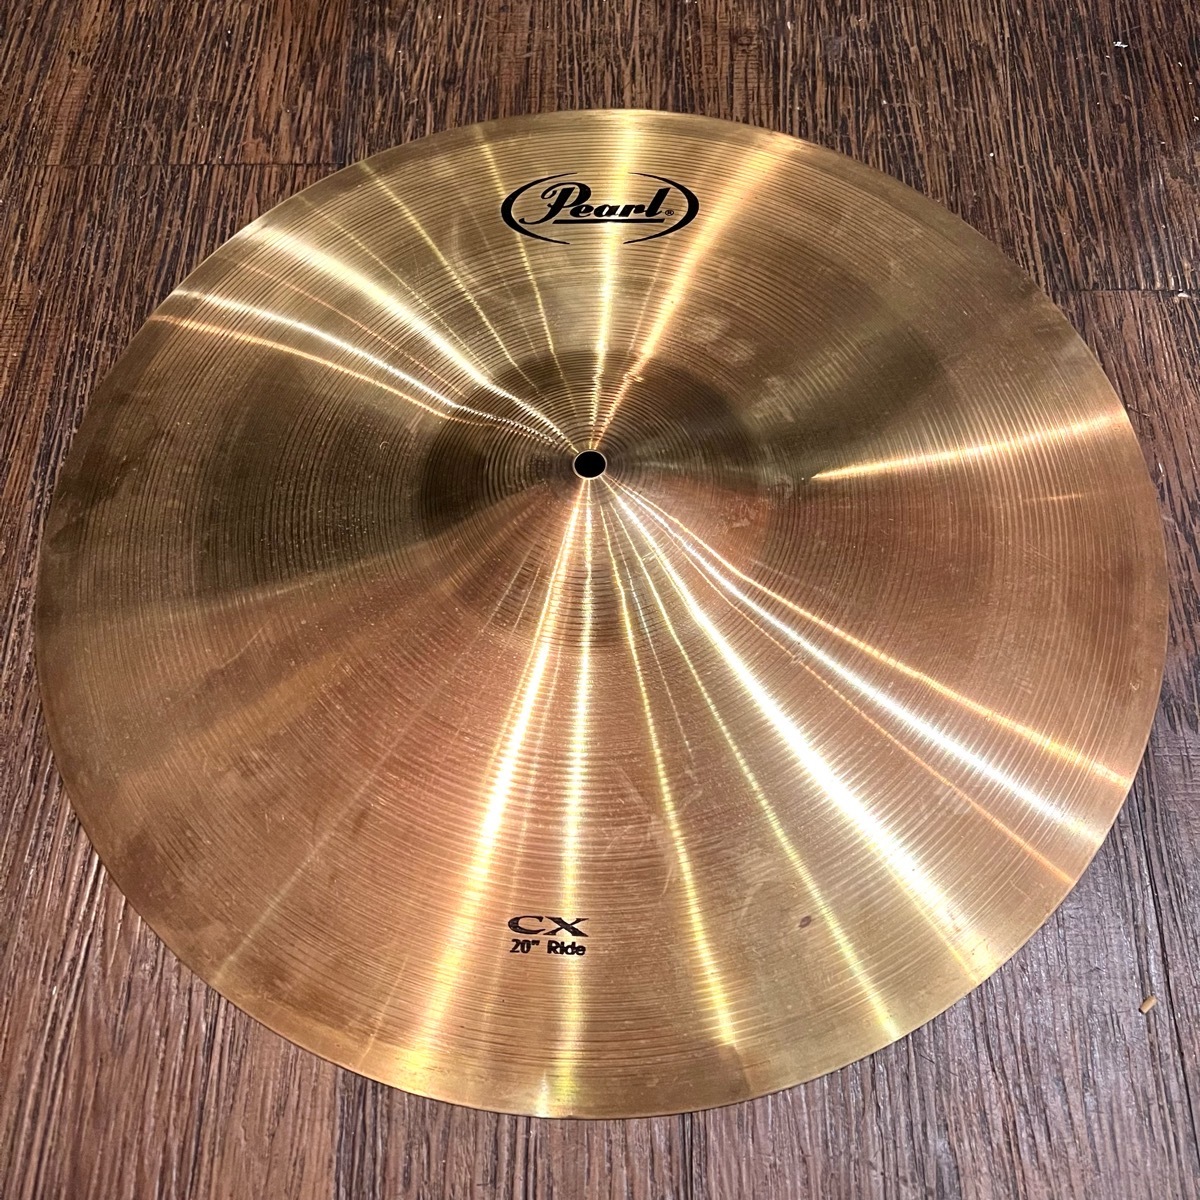 Pearl パール CX cymbal ライドシンバル 20インチ -GrunSound-h408-